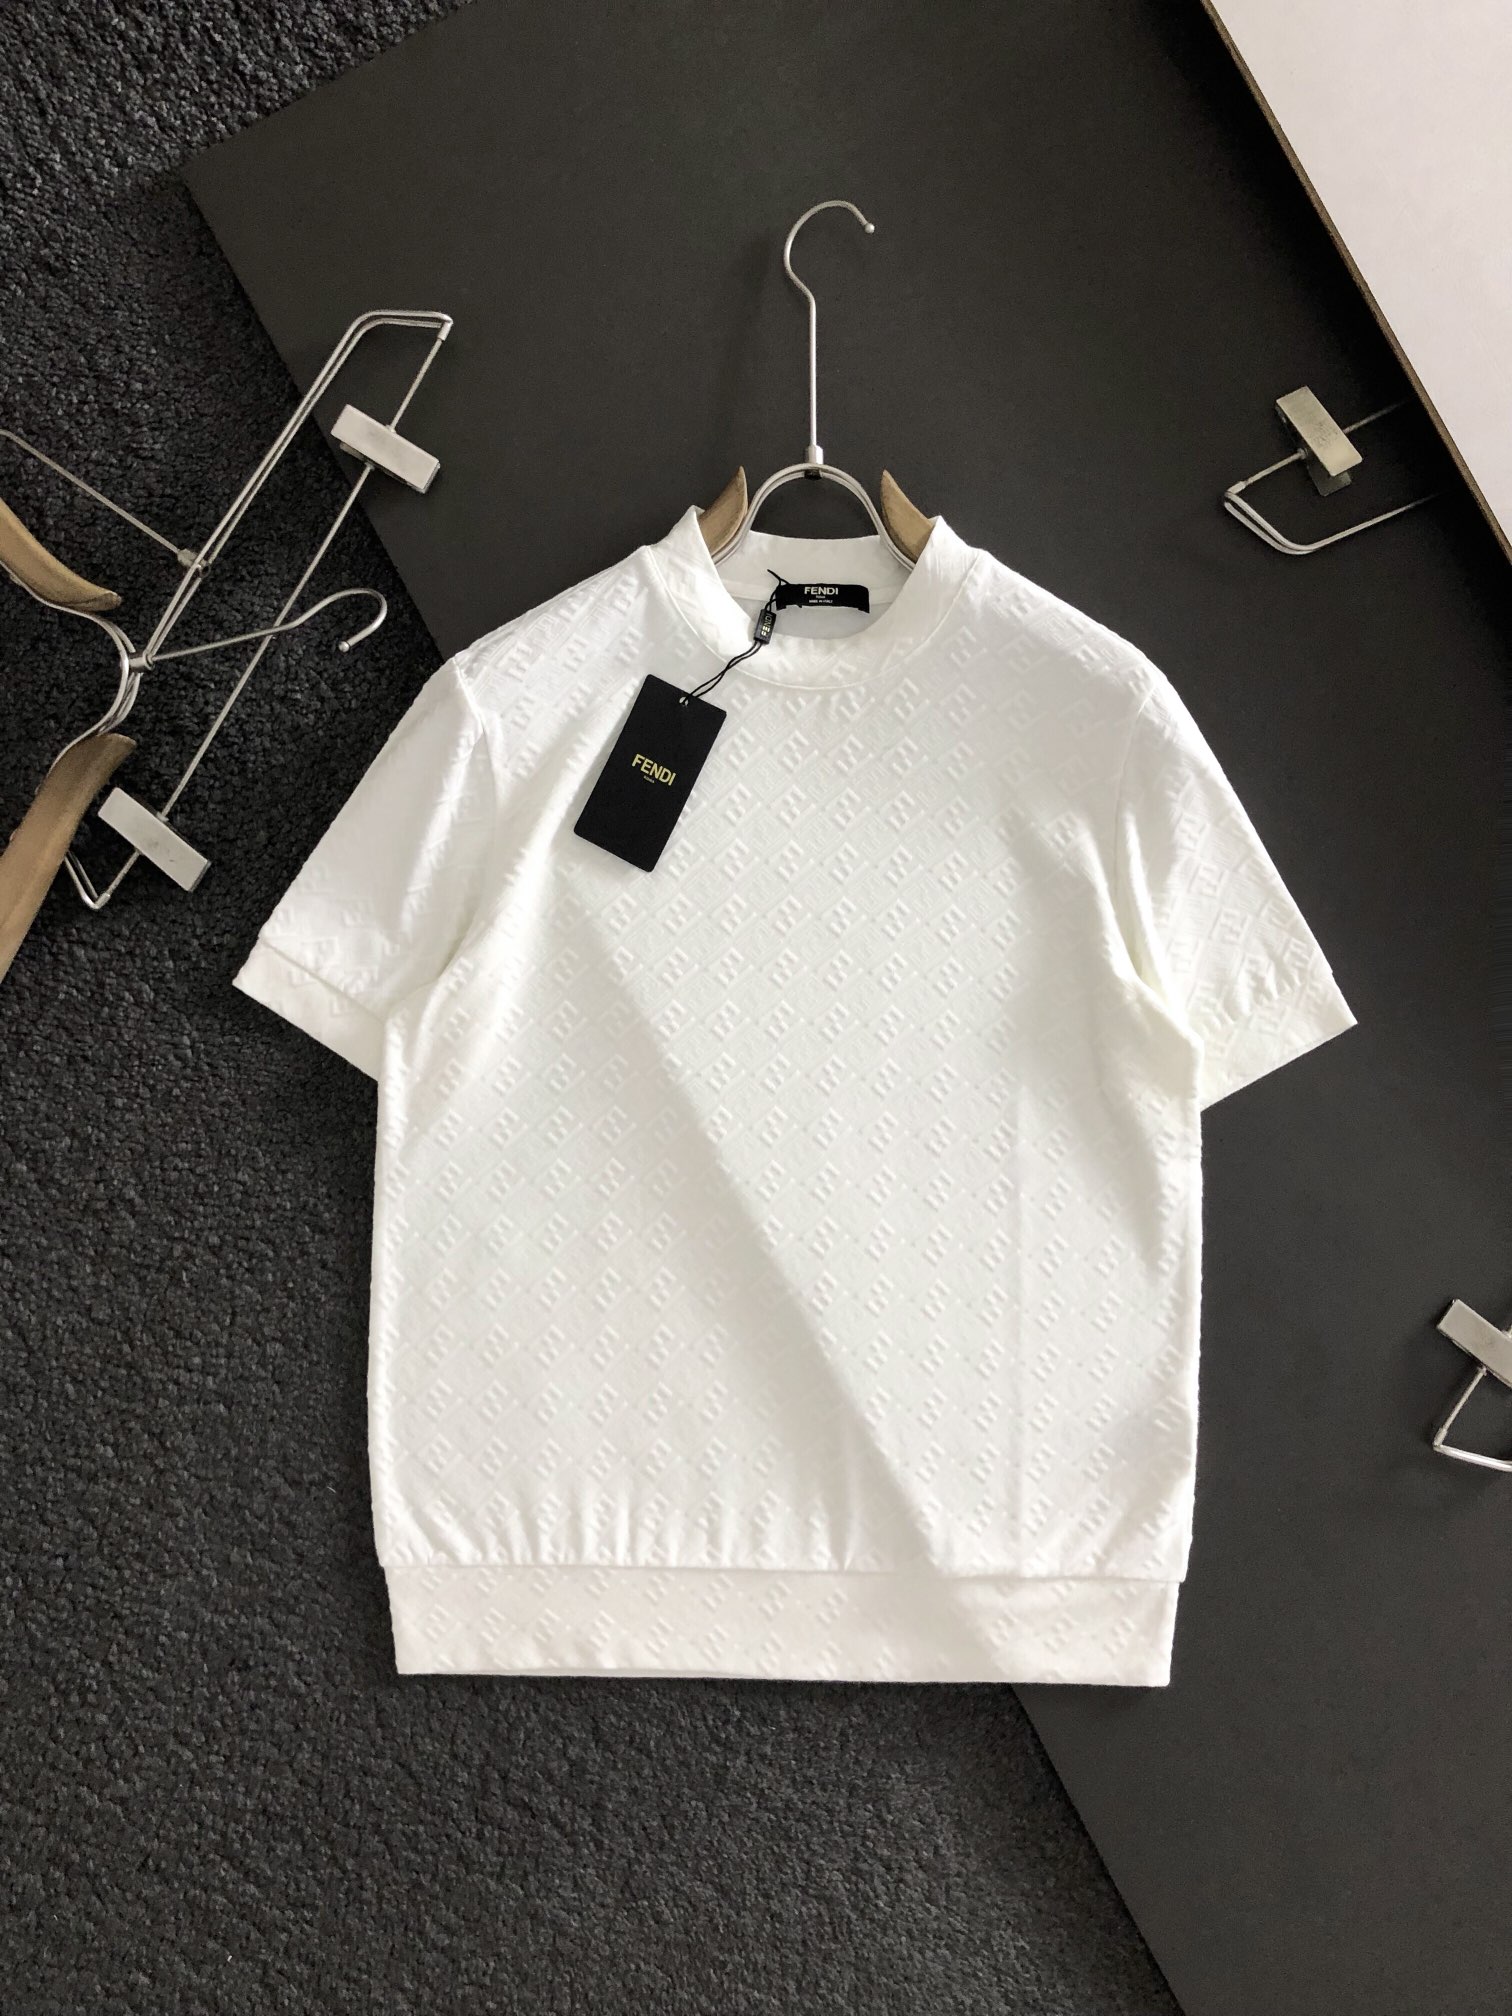 Fendi Clothing T-Shirt White Knitting Fall Collection Fashion Short Sleeve